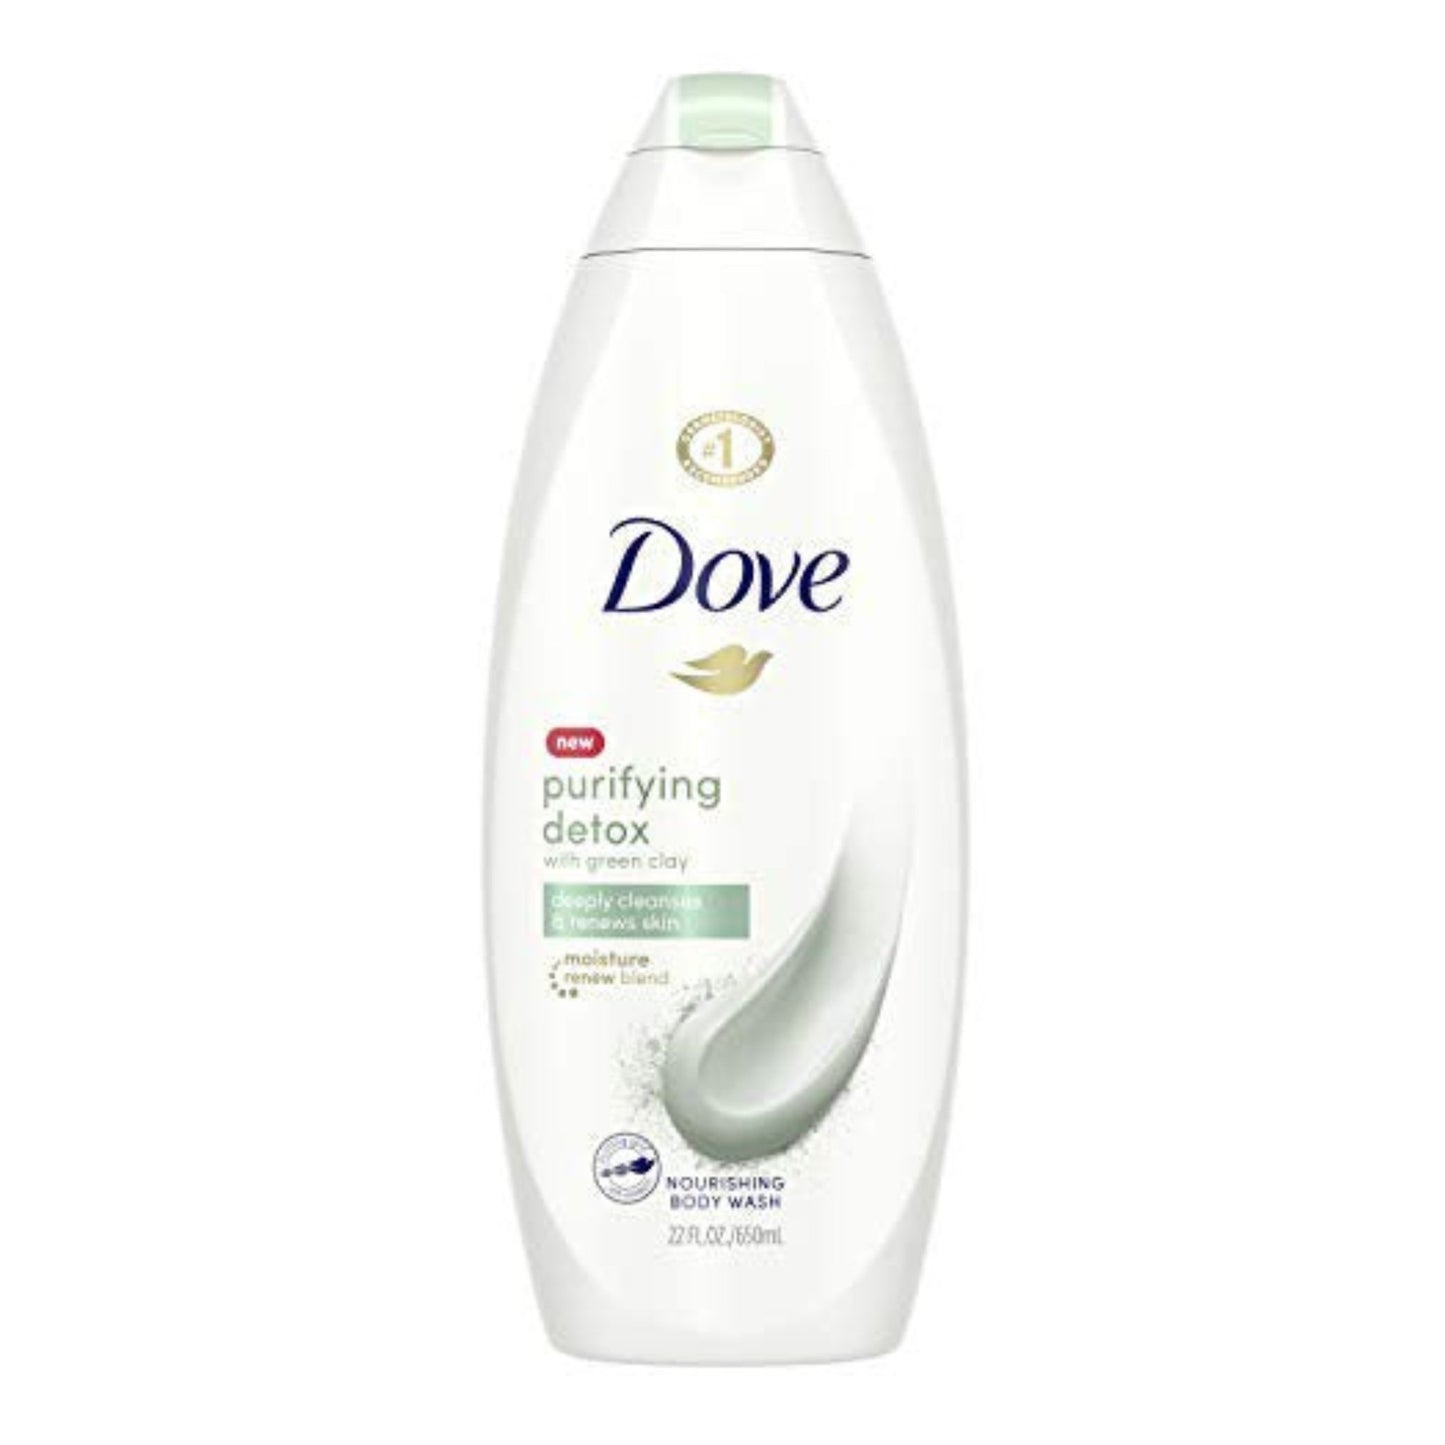 Dove Beauty Purifying Detox Green Clay Body Wash - (650mL)